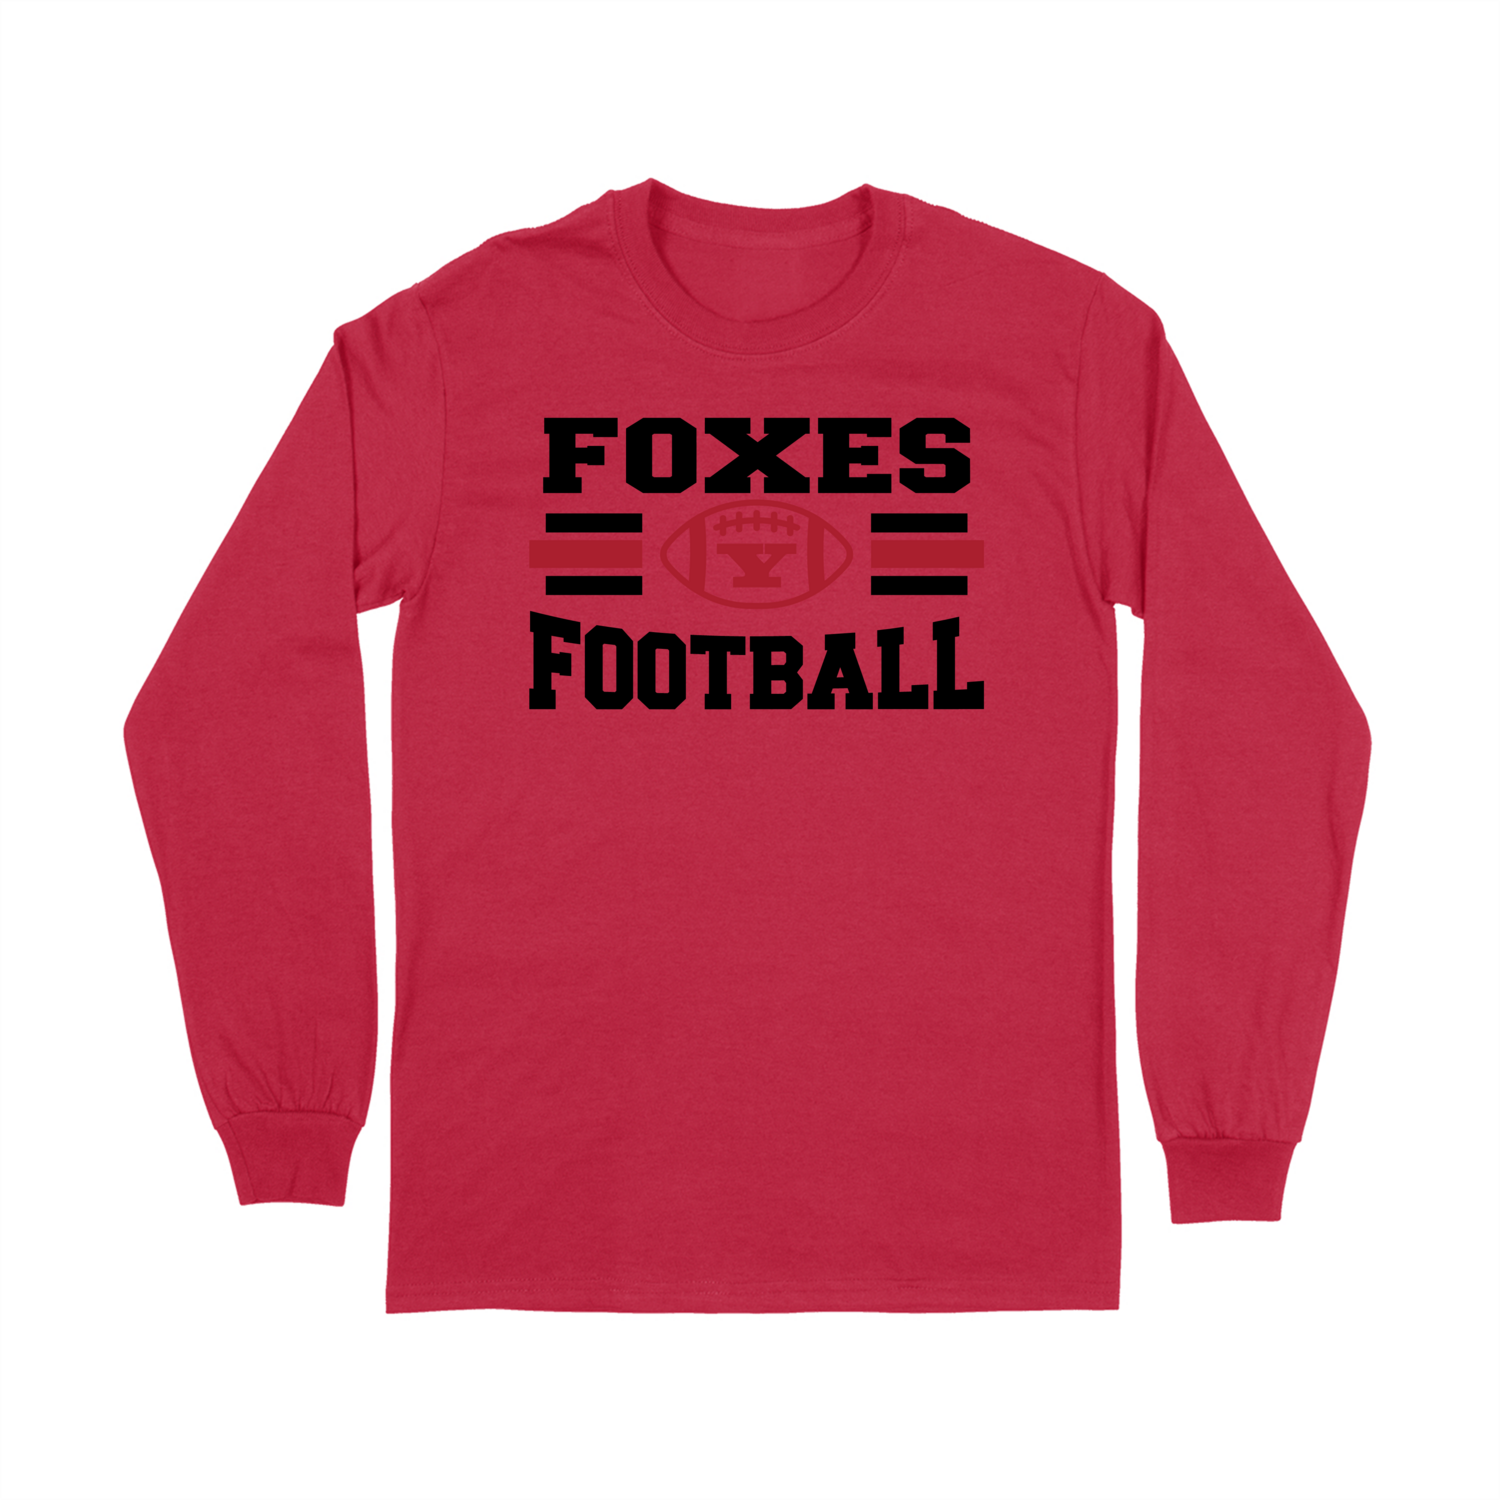 Foxes Football I - Long Sleeved Tee